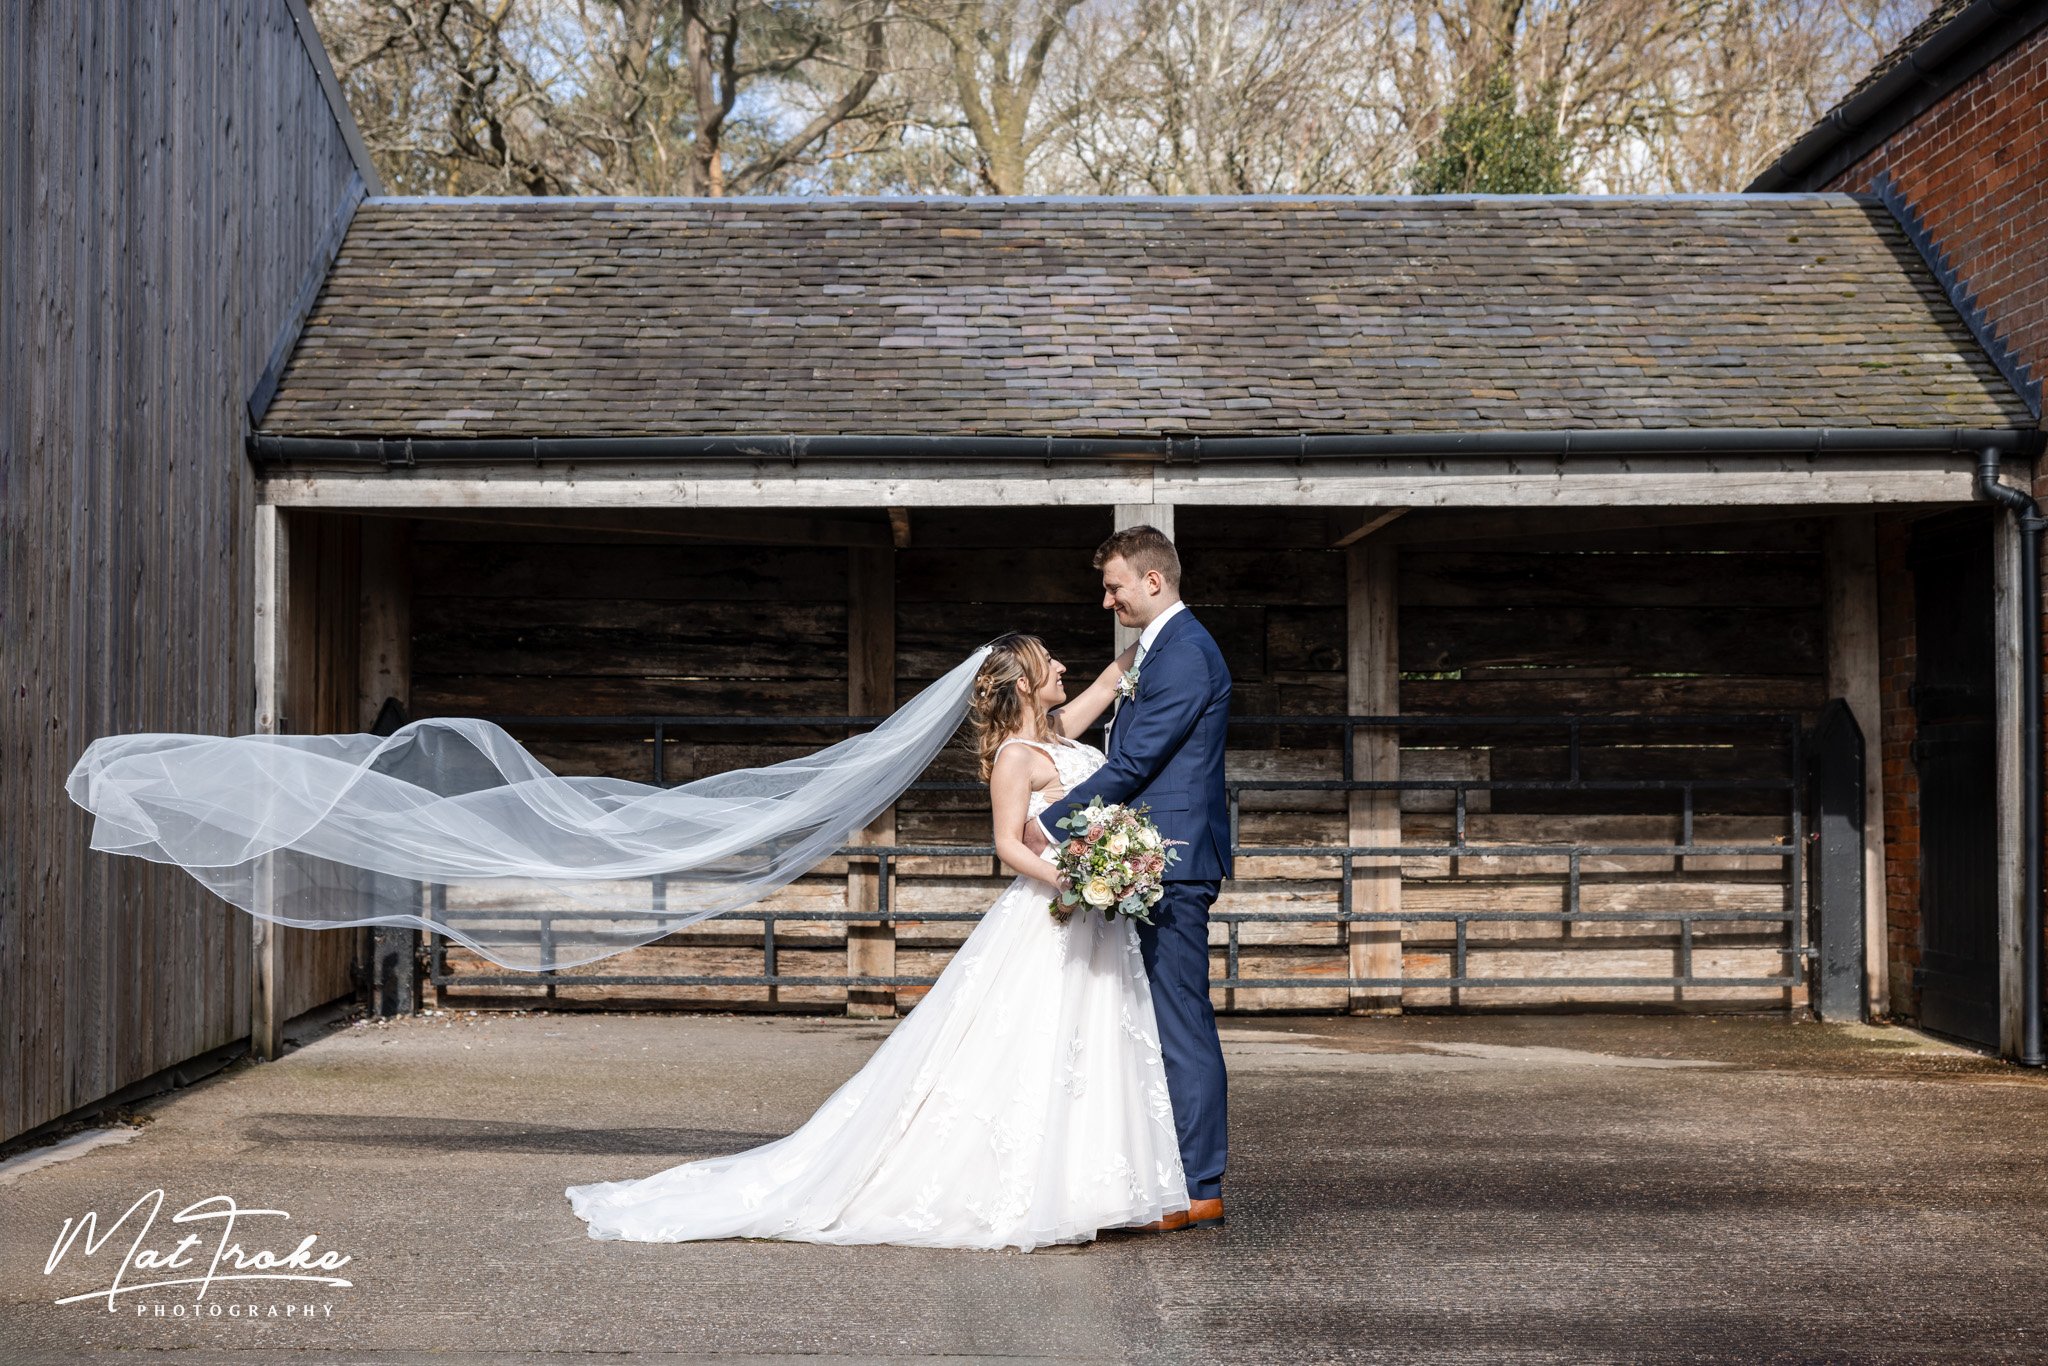 hanbury.wedding.barns.relaxed.photography.photos-31.jpg